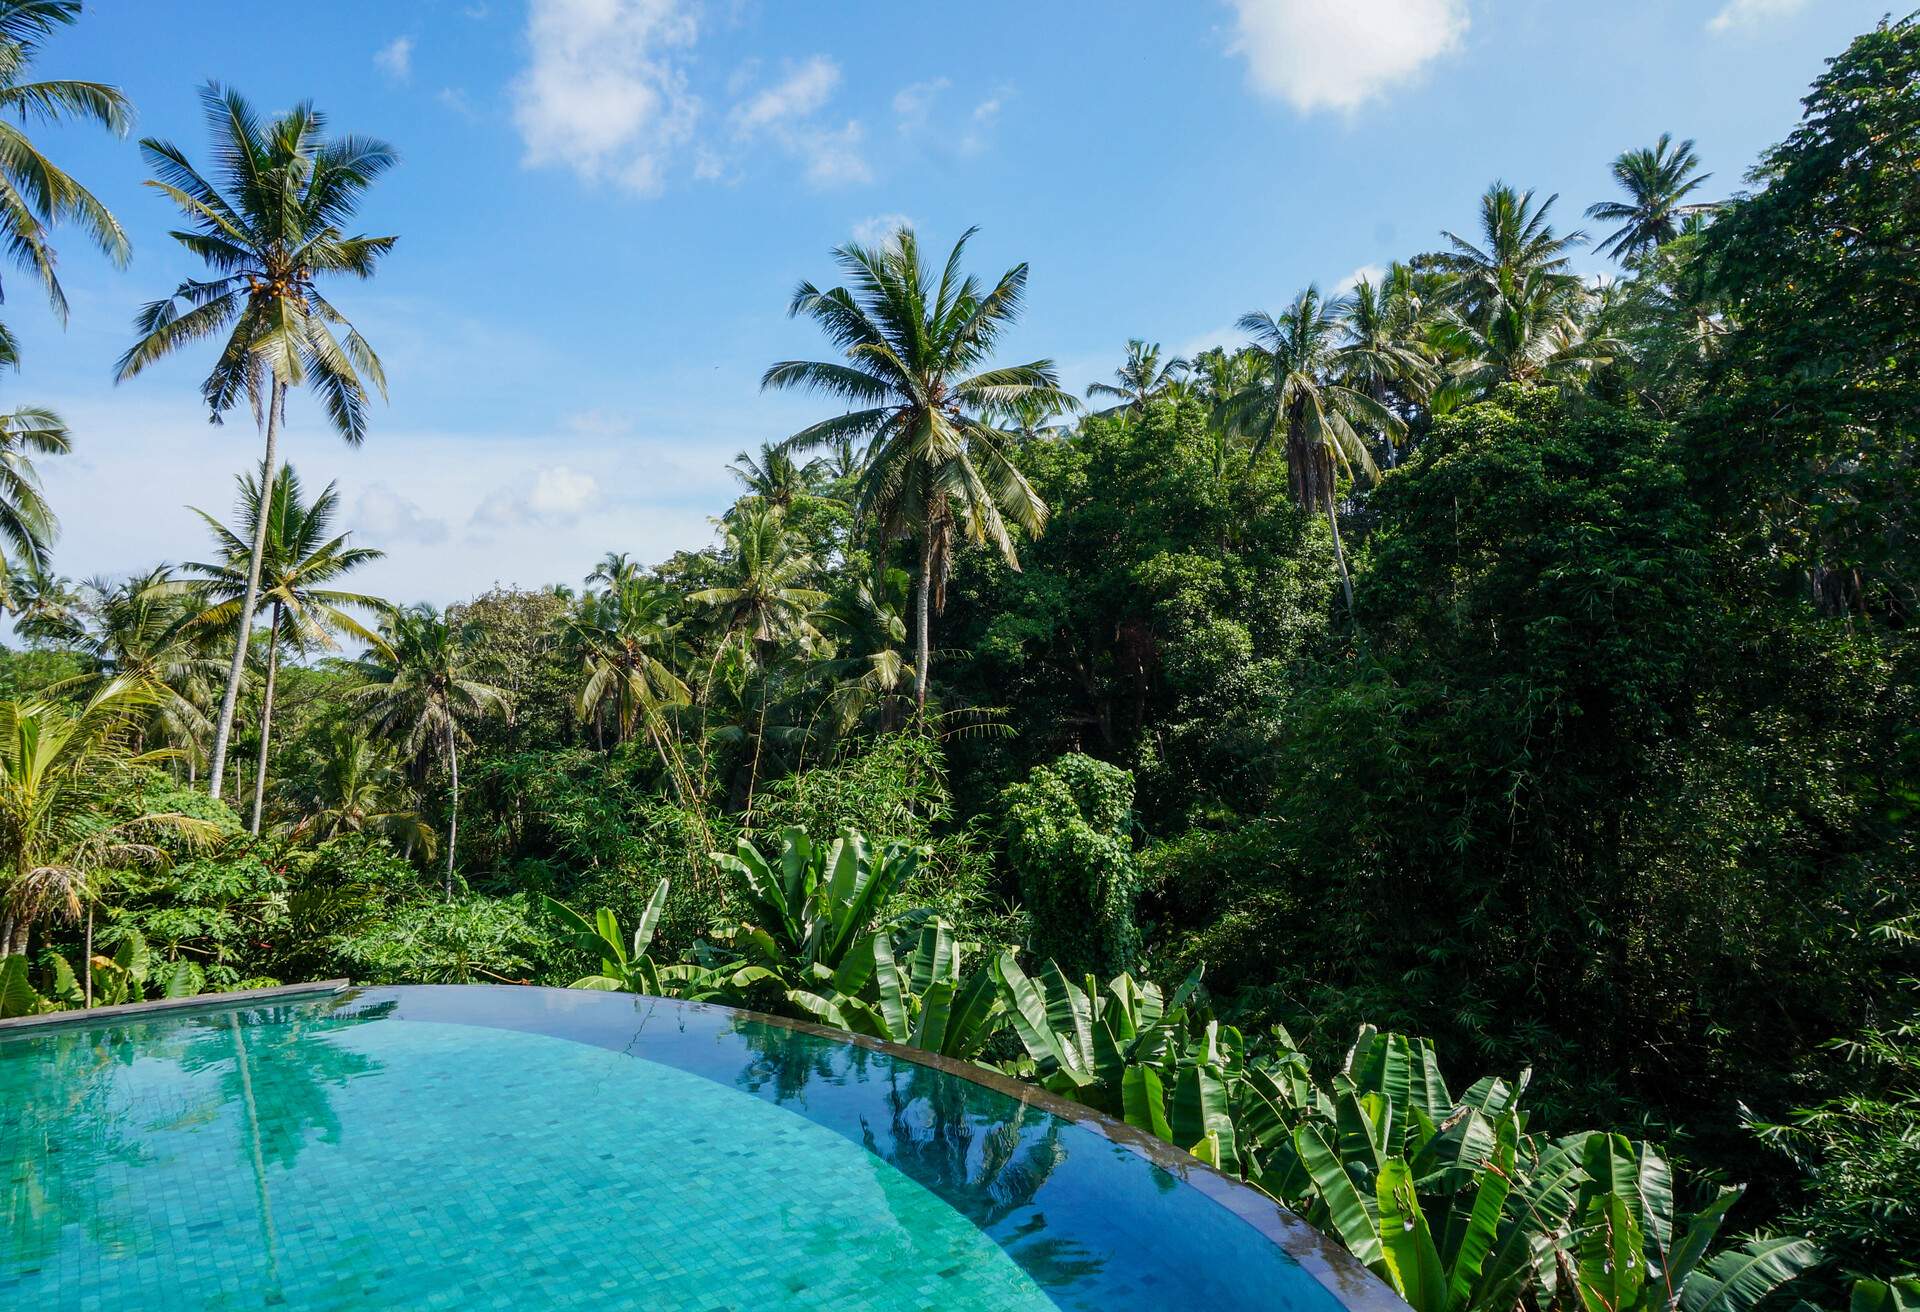 Beautiful pool with junge views in Ubud, Bali